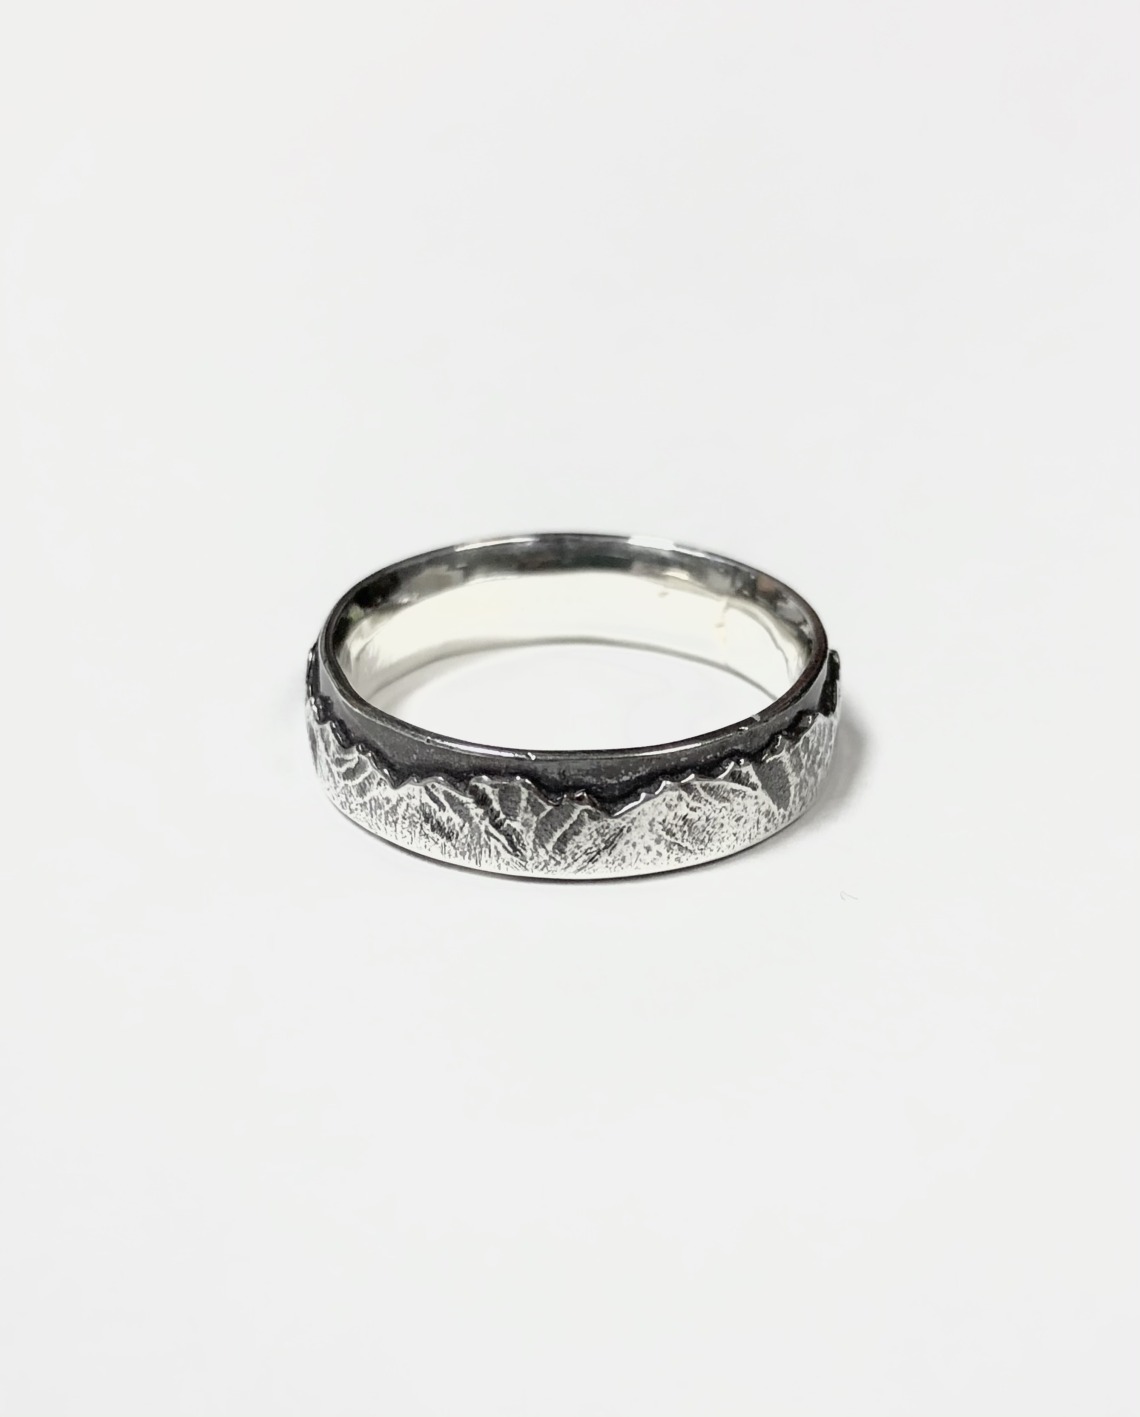 Santa Catalinas: a hand-forged sterling silver ring